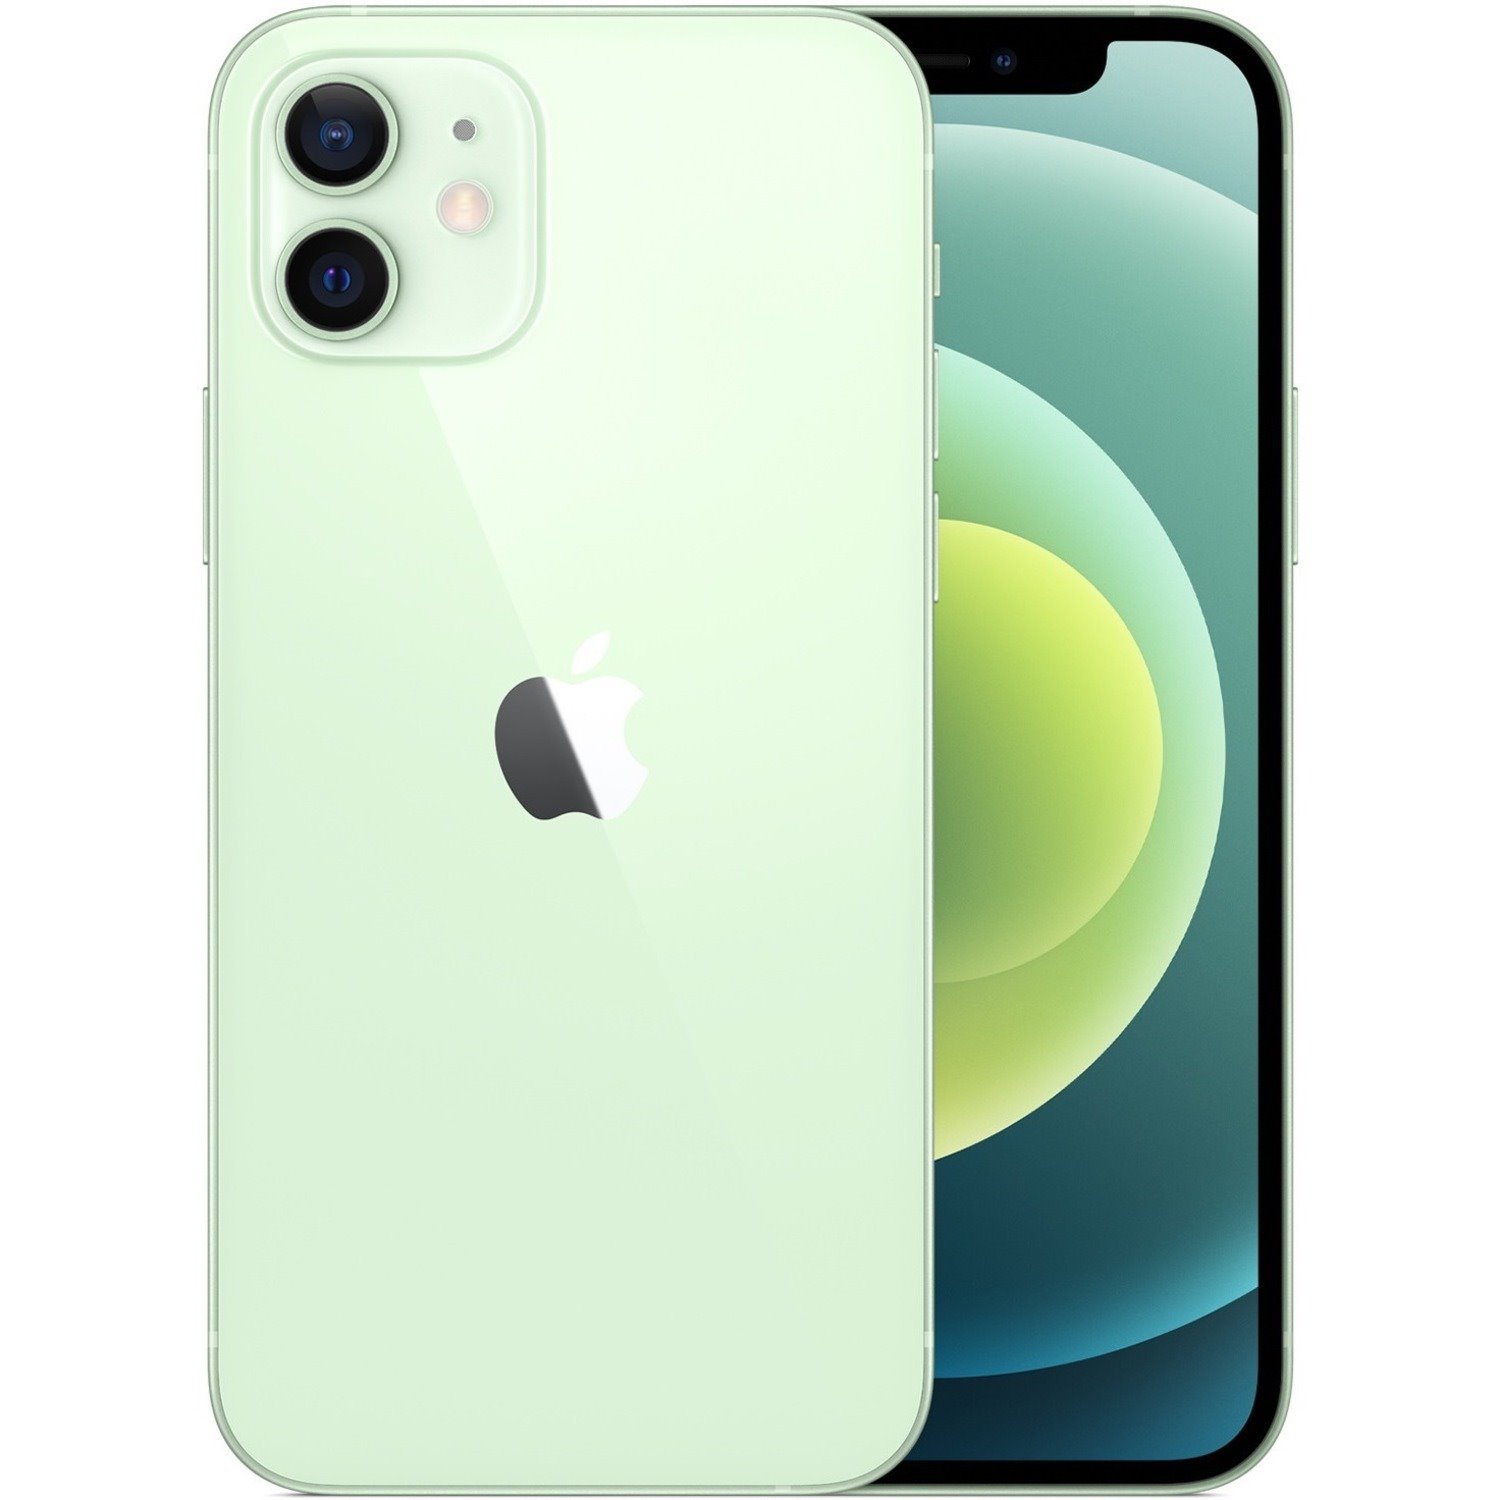 Apple Apple iPhone 12 A2403 128 GB Smartphone - 6.1" OLED Full HD Plus 2532 x 1170 - Hexa-core (FirestormDual-core (2 Core) 3.10 GHz + Icestorm Quad-core (4 Core) 1.80 GHz - 4 GB RAM - iOS 14 - 5G - Green